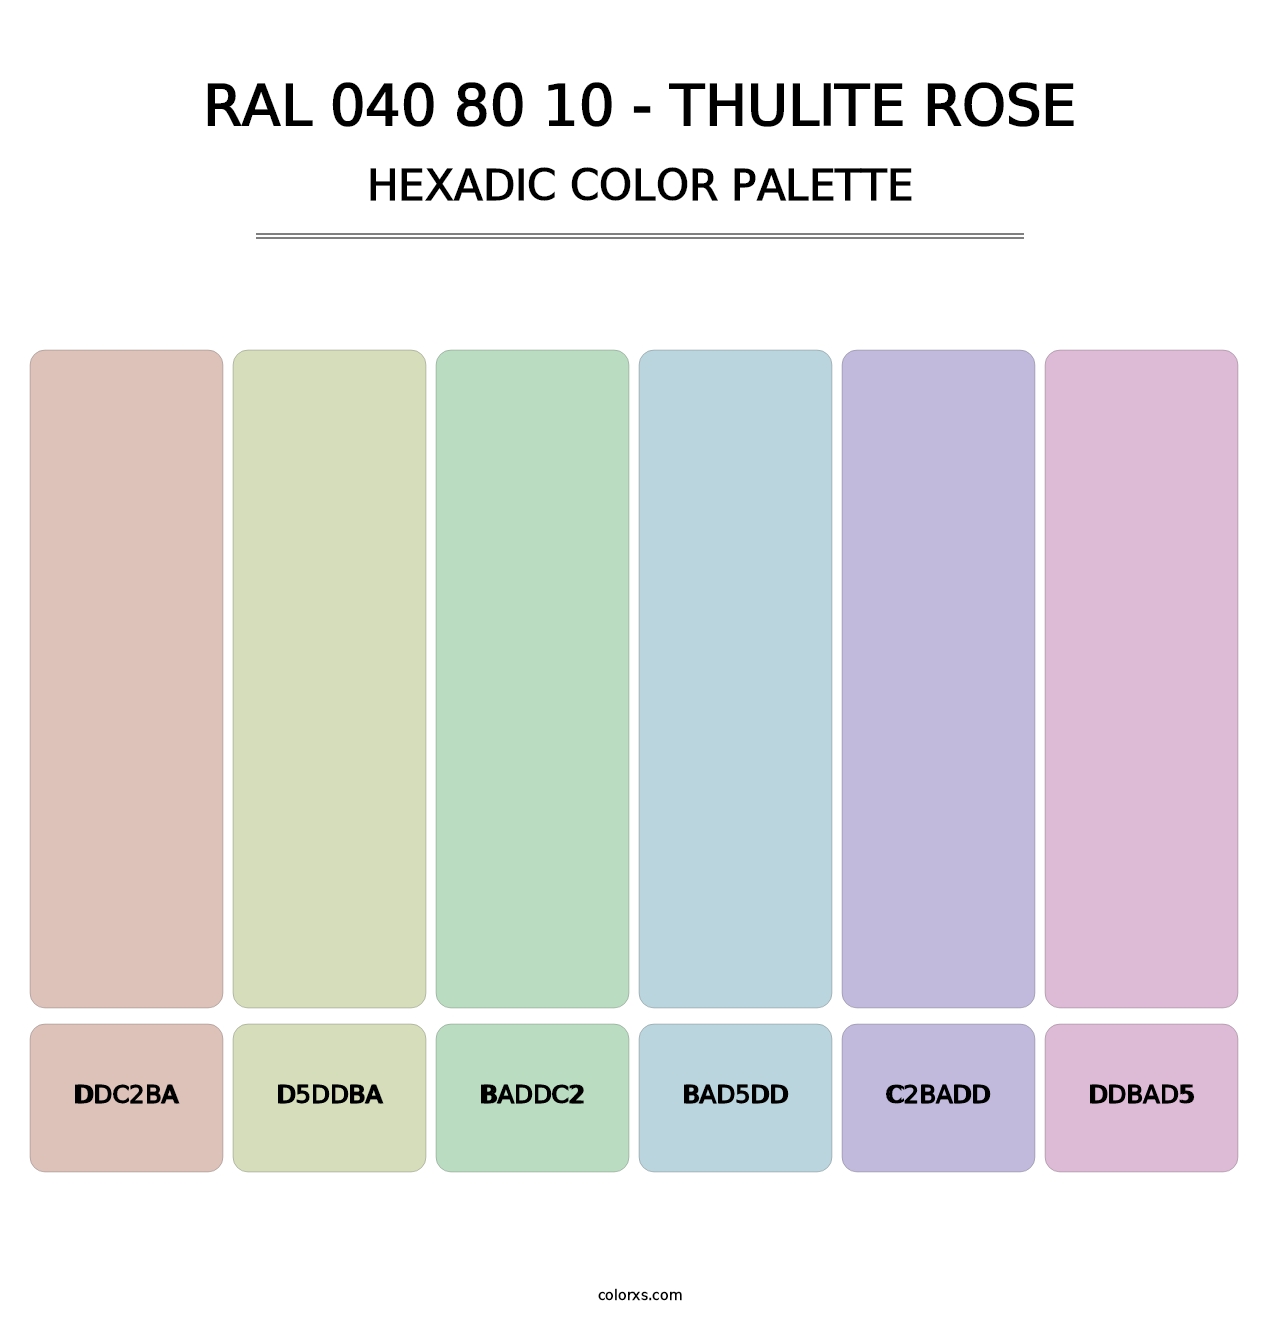 RAL 040 80 10 - Thulite Rose - Hexadic Color Palette